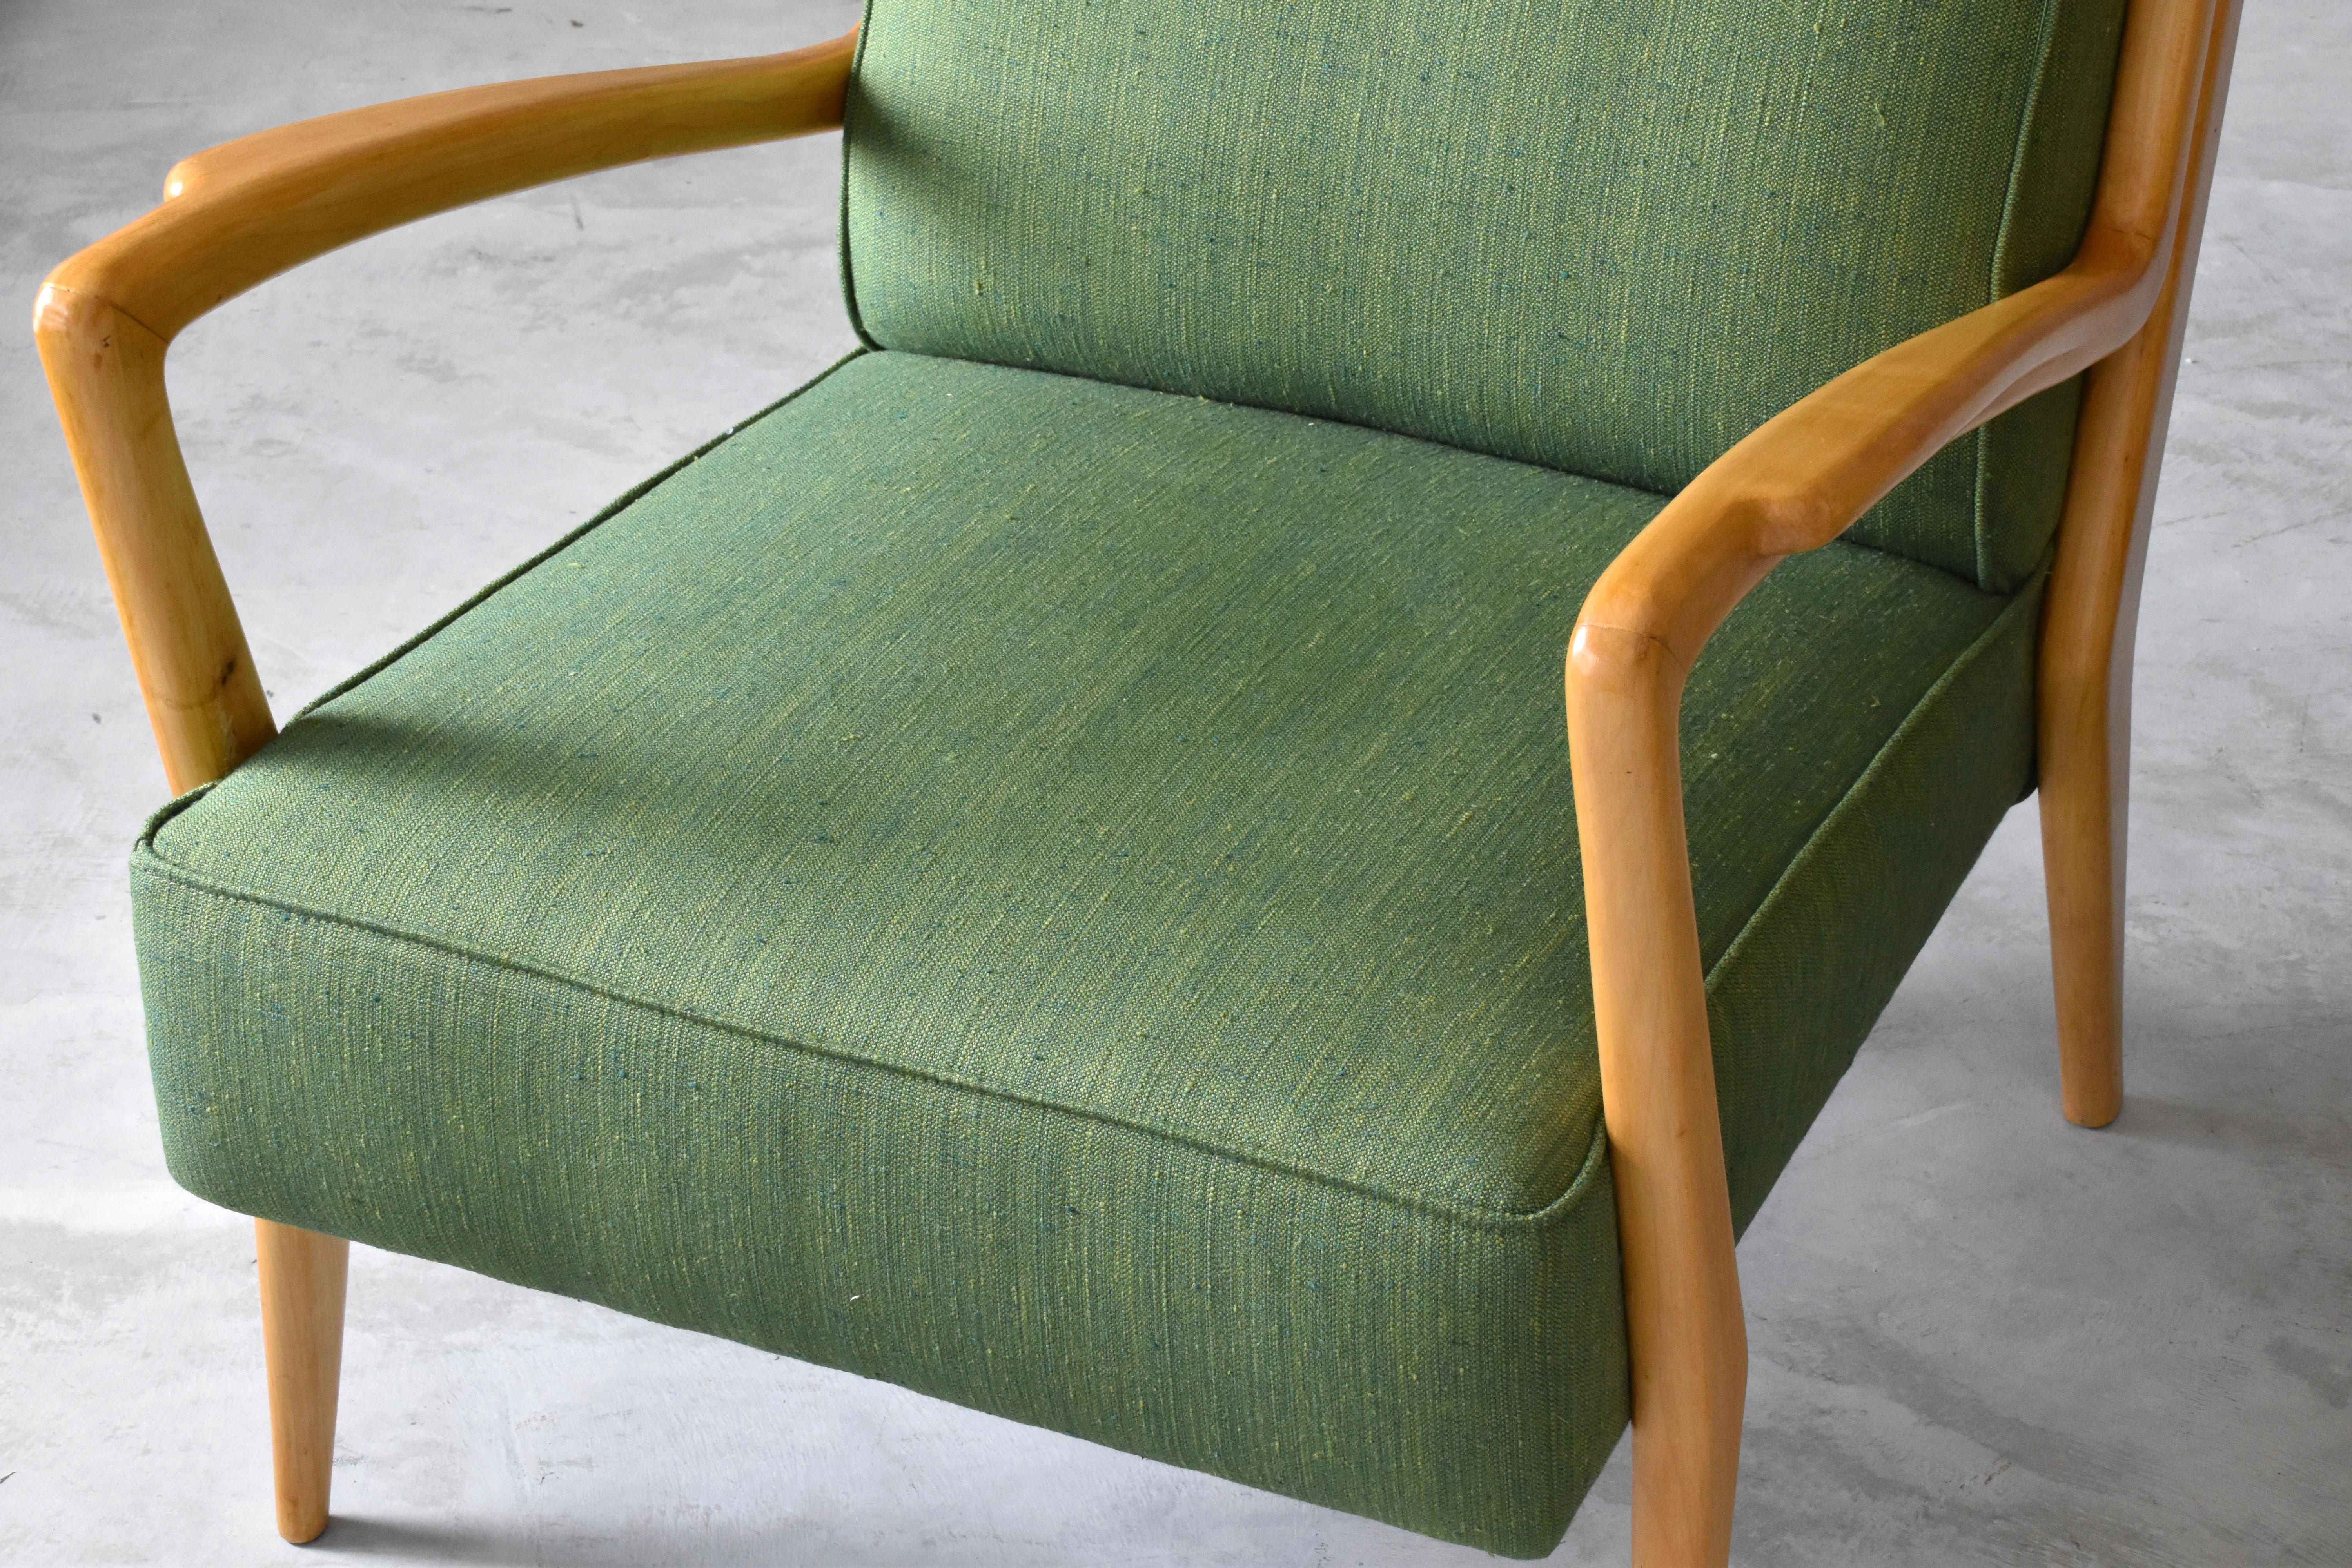 Orlando Orlandi, Rare Lounge Chairs, Green Fabric, Wood, Brianza, Italy, 1948 1